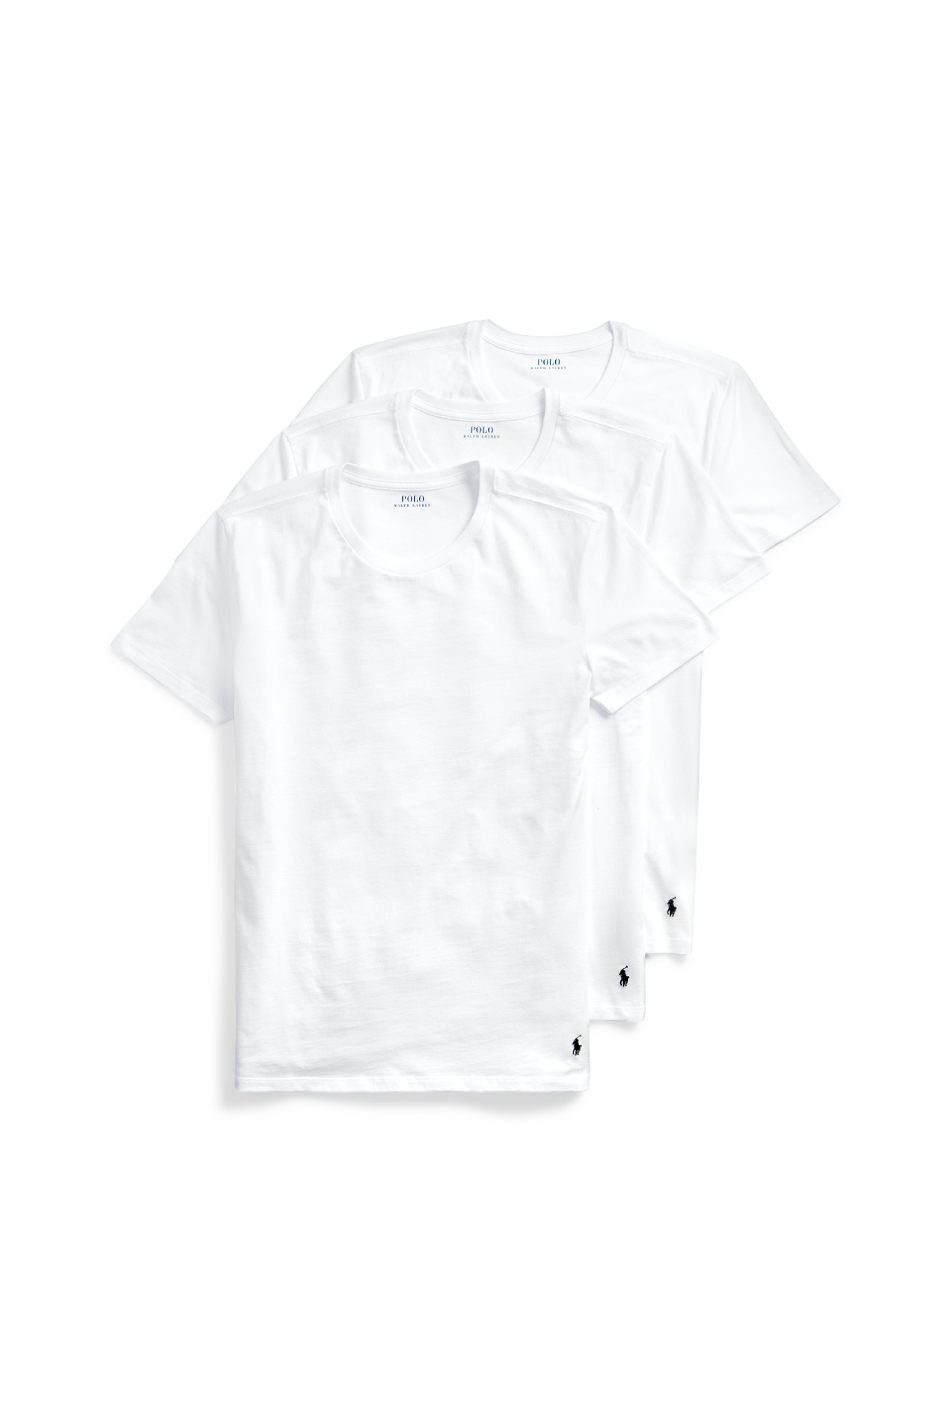 Polo Ralph Lauren Men's 3 Pack Crew T-Shirt